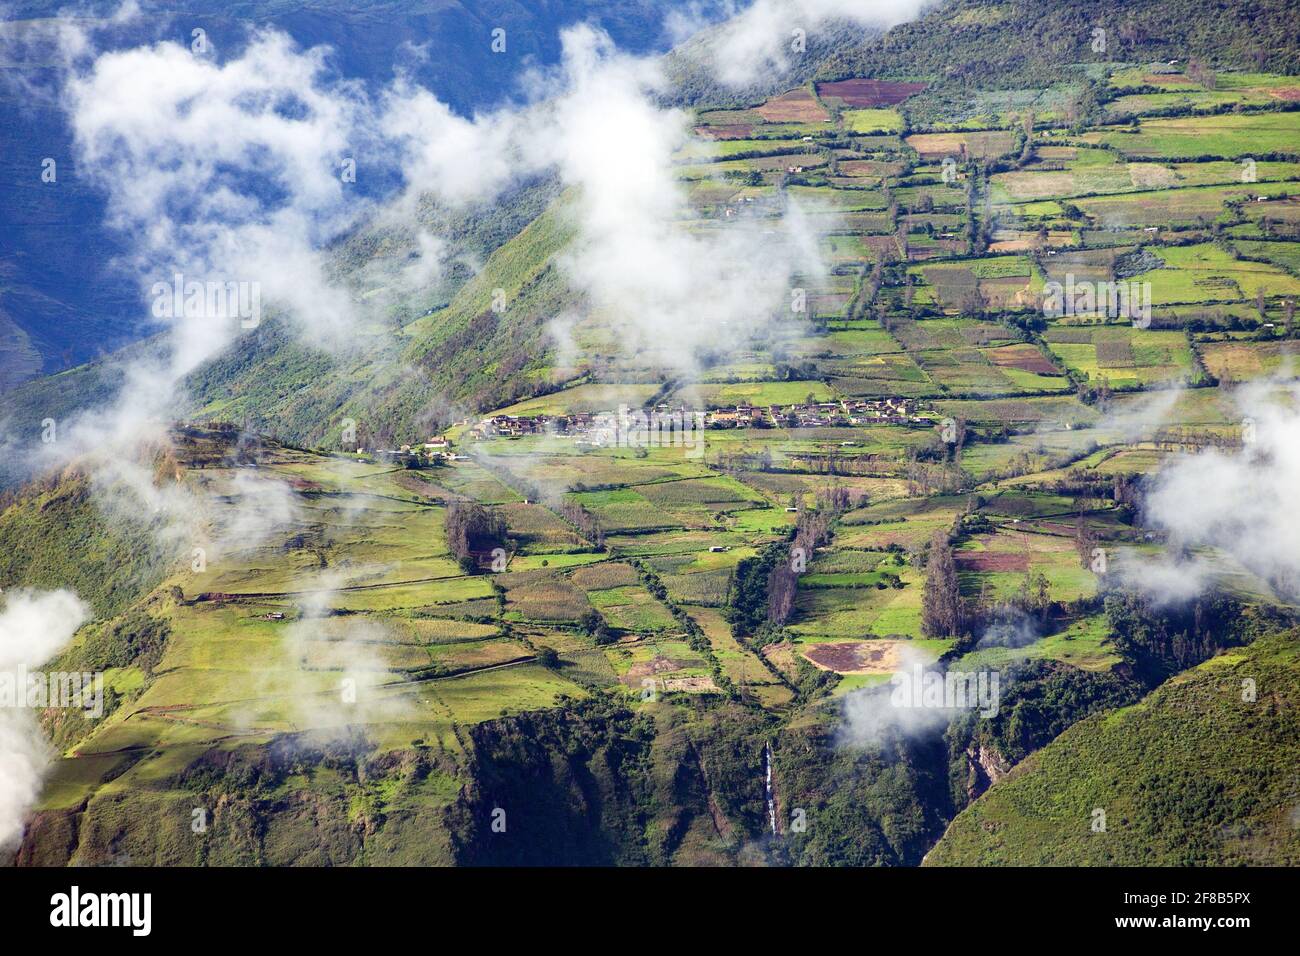 Village and terraced field in peru, view from Choquequirao trekking trail, Cuzco area, Machu Picchu area, Peruvian Andes Stock Photo